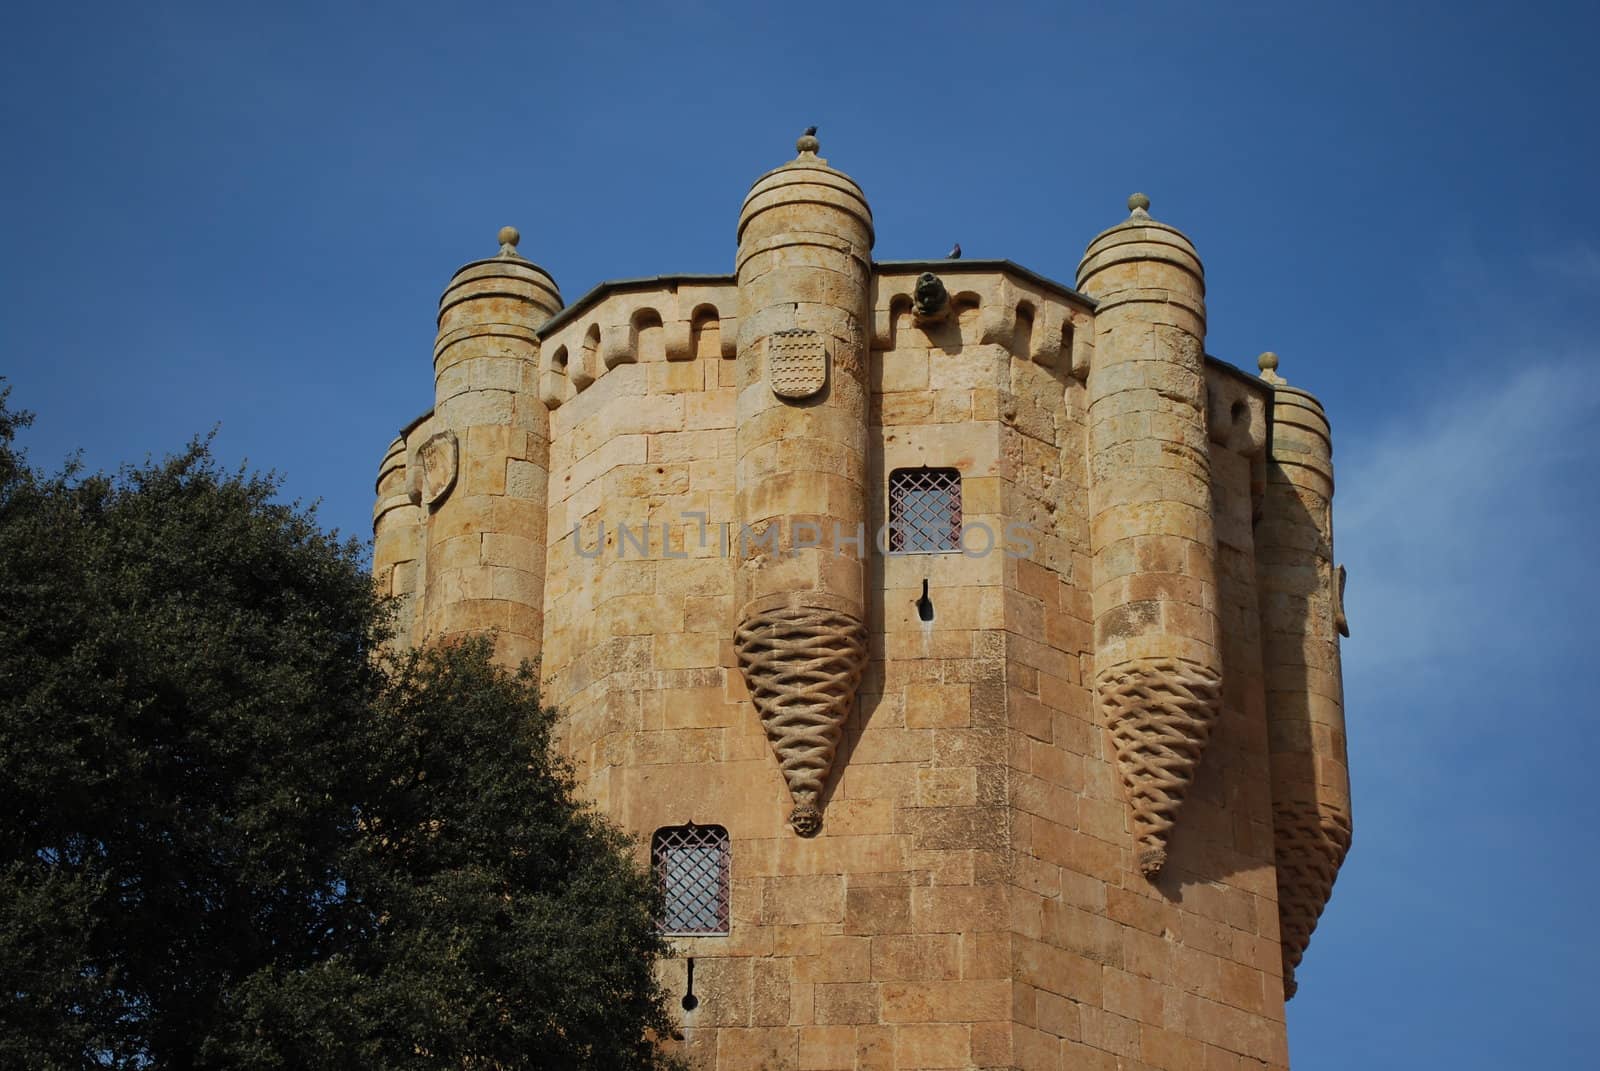 Tower of Clavero in Salamanca, Spain by luissantos84